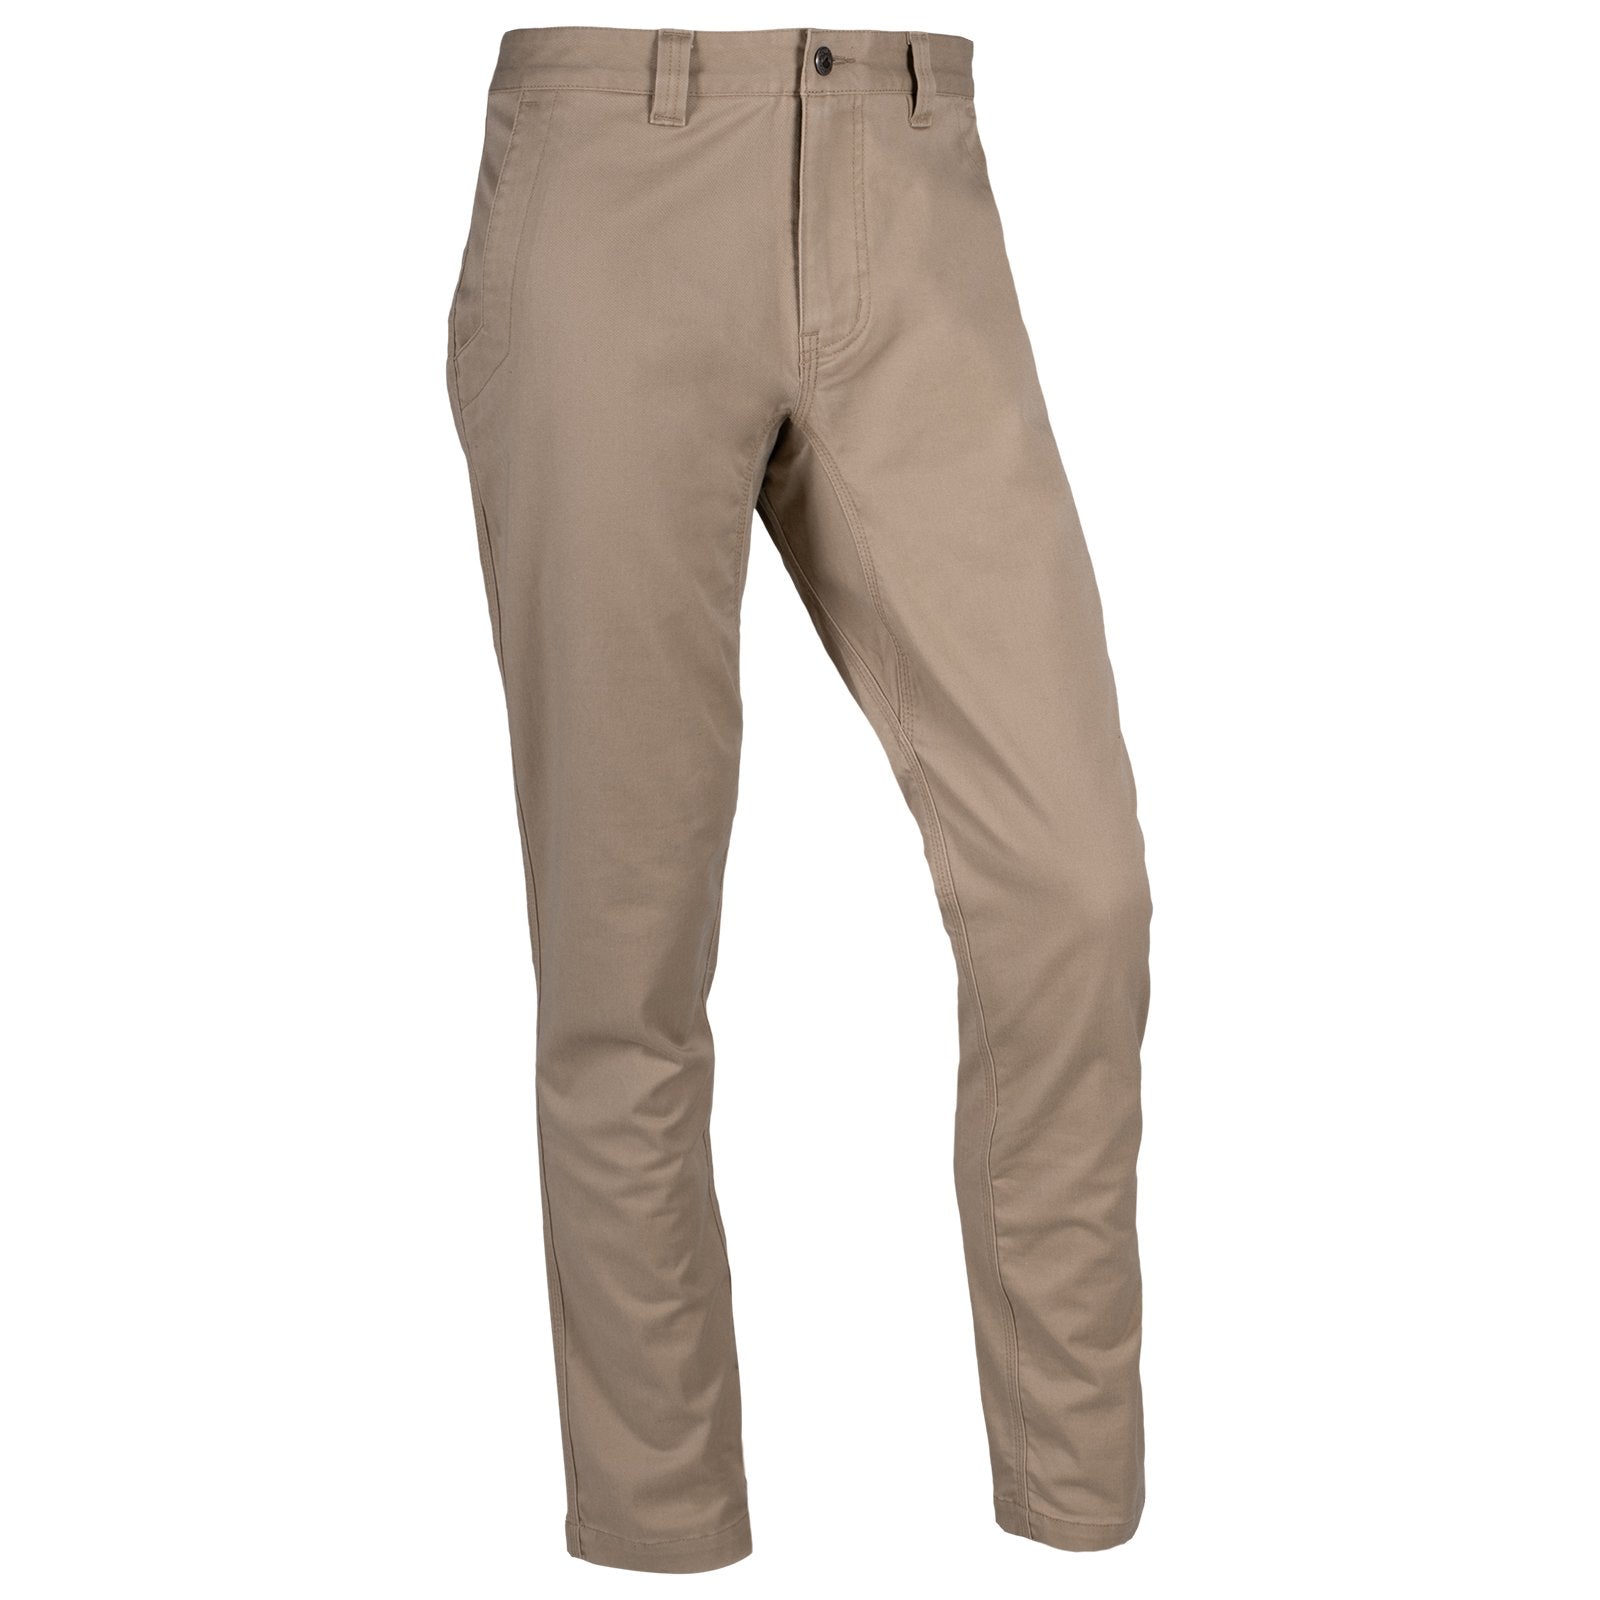 Contemporary Modern Fit Trouser for Men - Simon Jersey